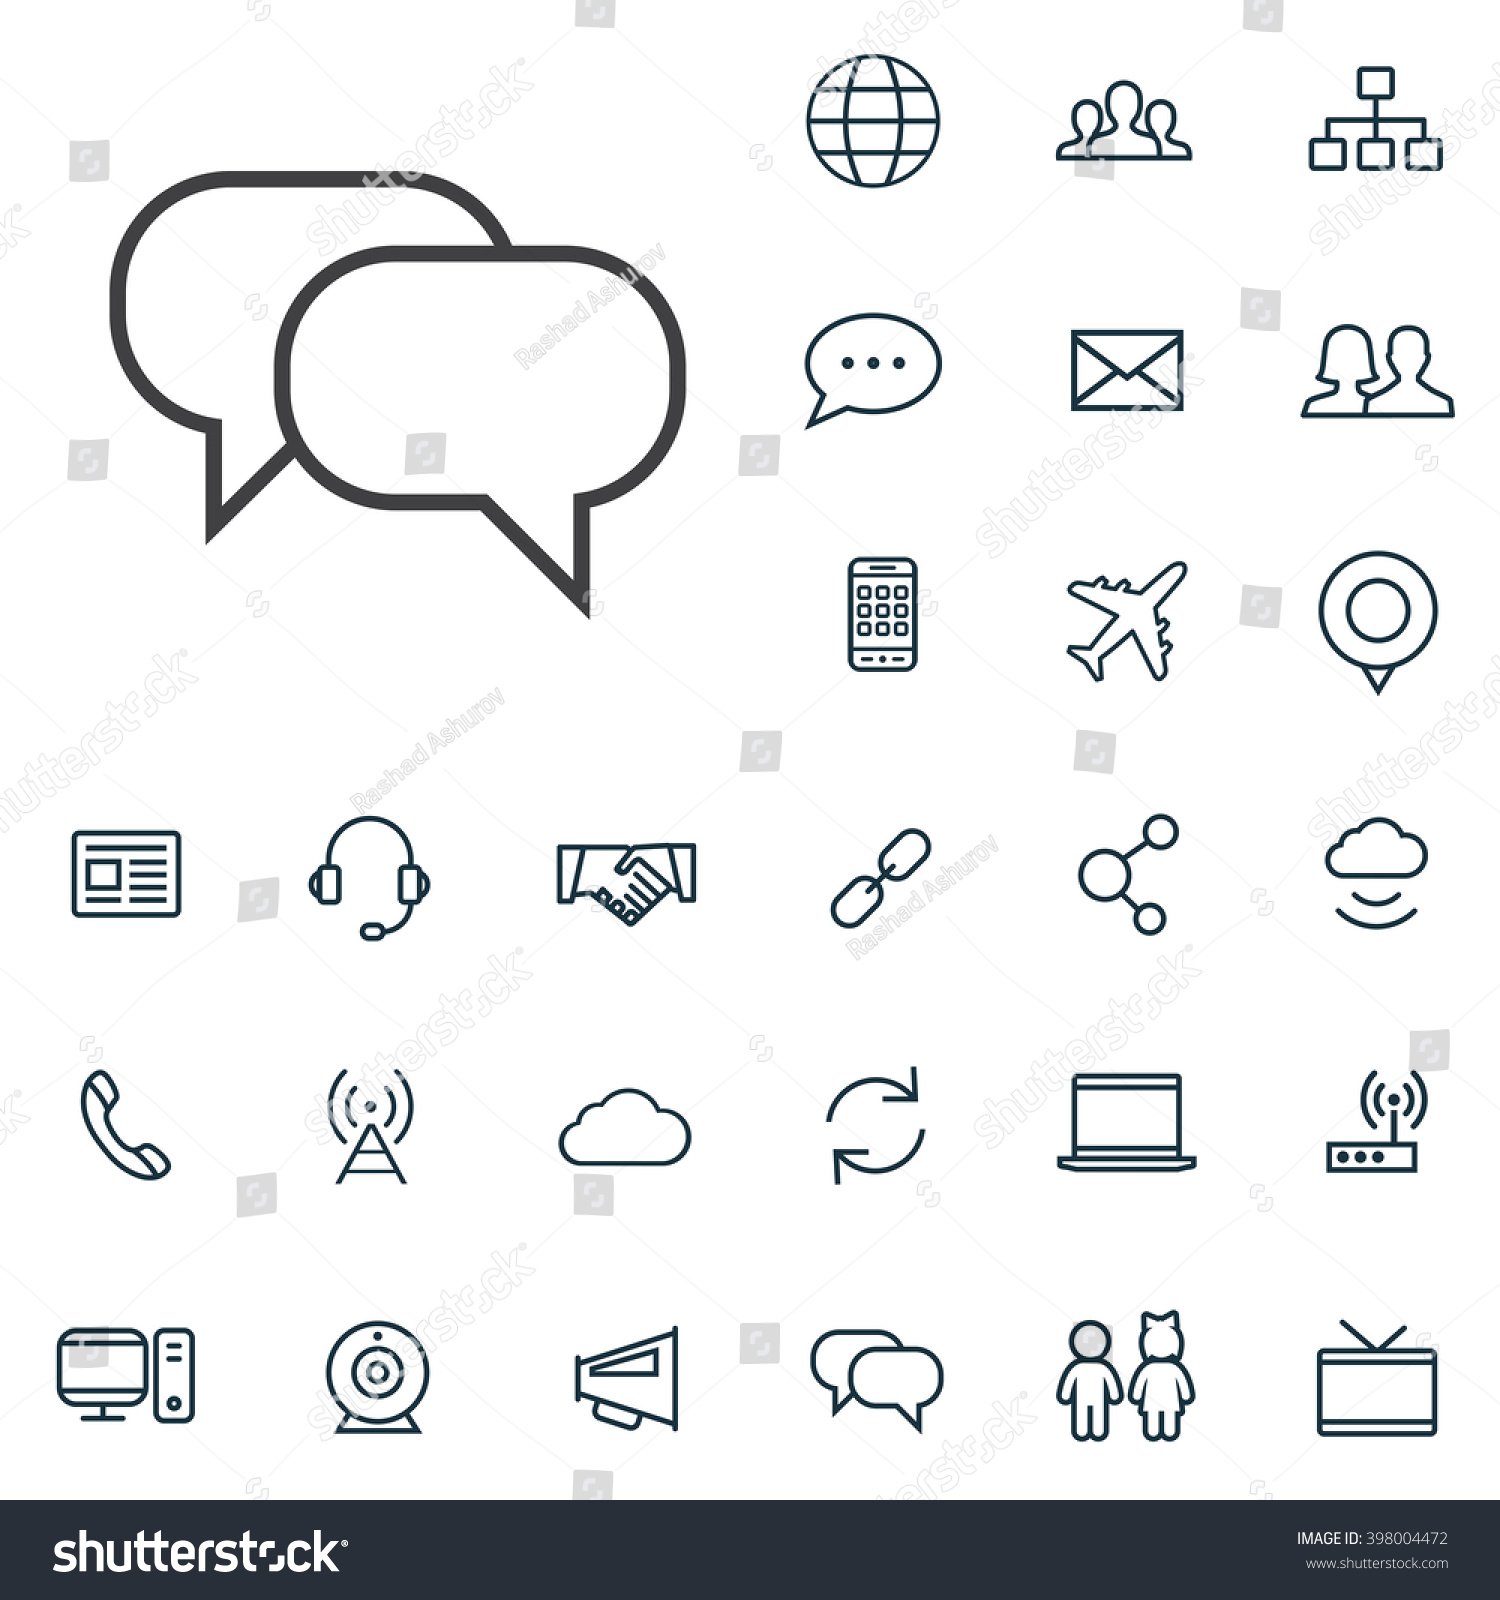 Linear communication icons set. Universal communication icon to use in web and mobile UI, communication basic UI elements set #398004472